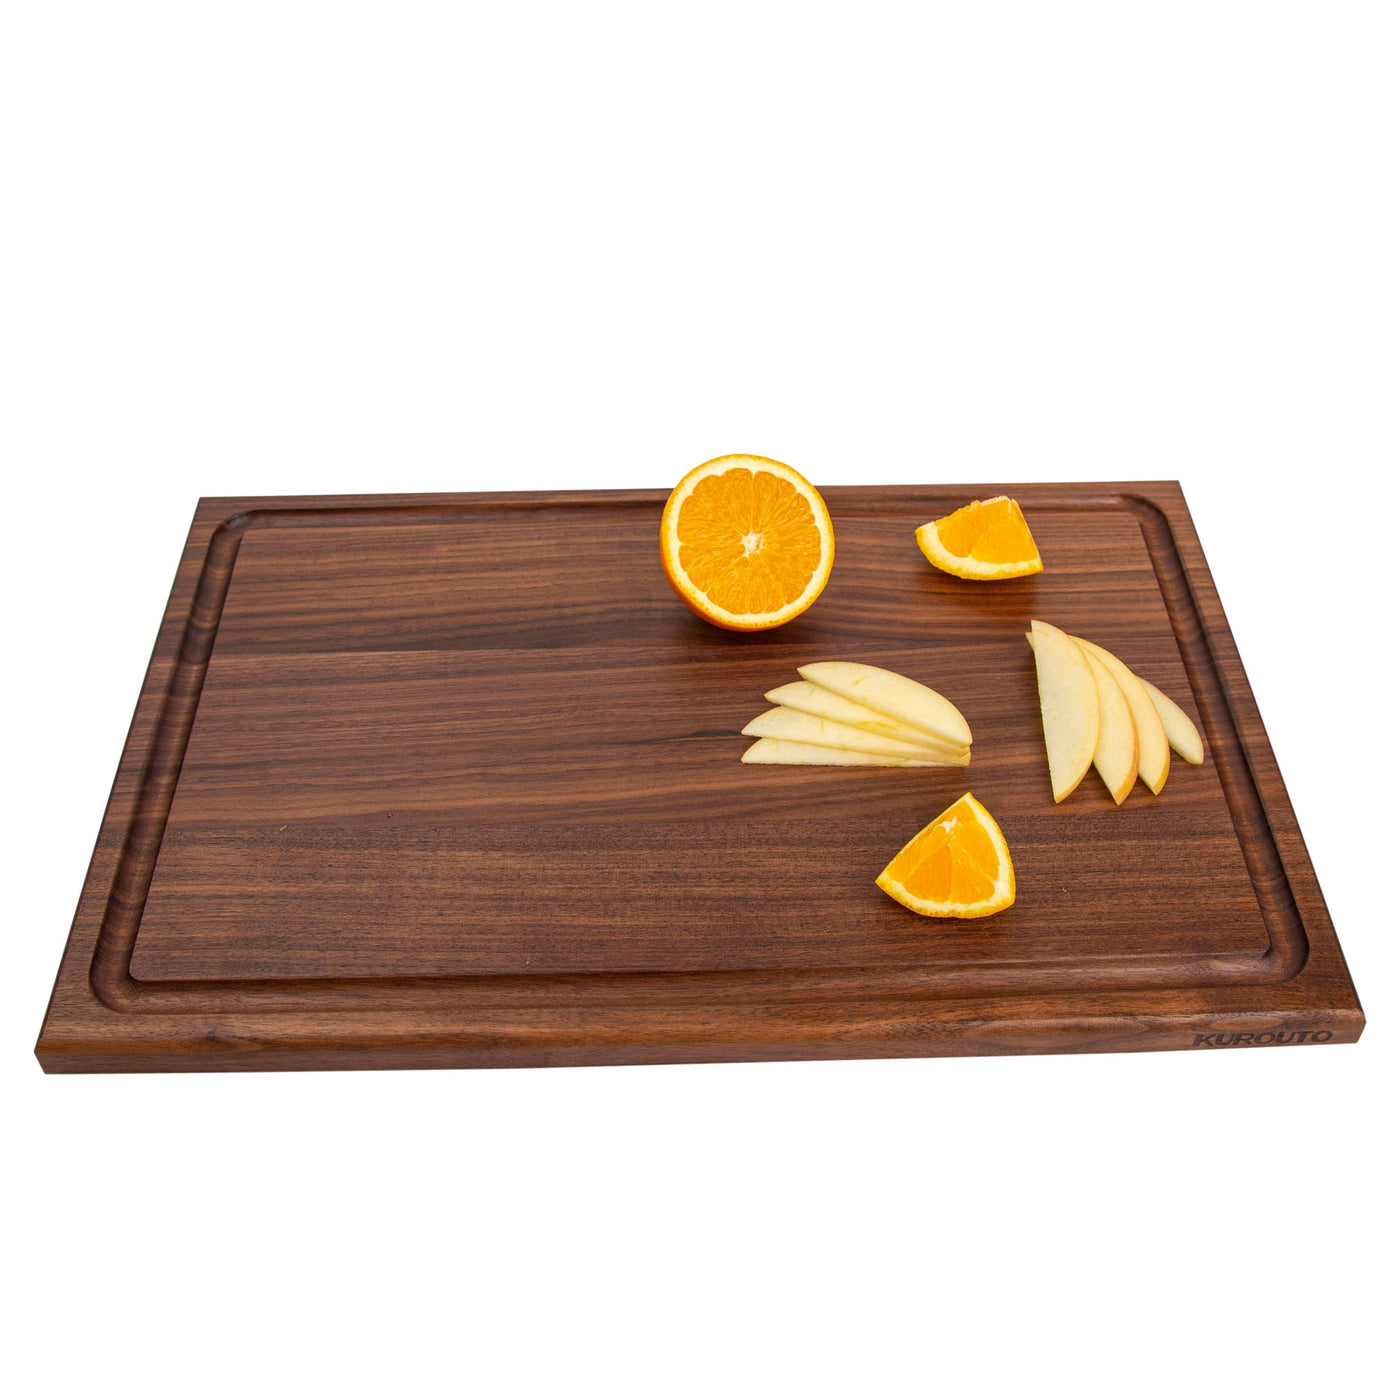 Edge Grain Walnut Cutting Board with Juice Groove (17 x 11 x .75 Inches)